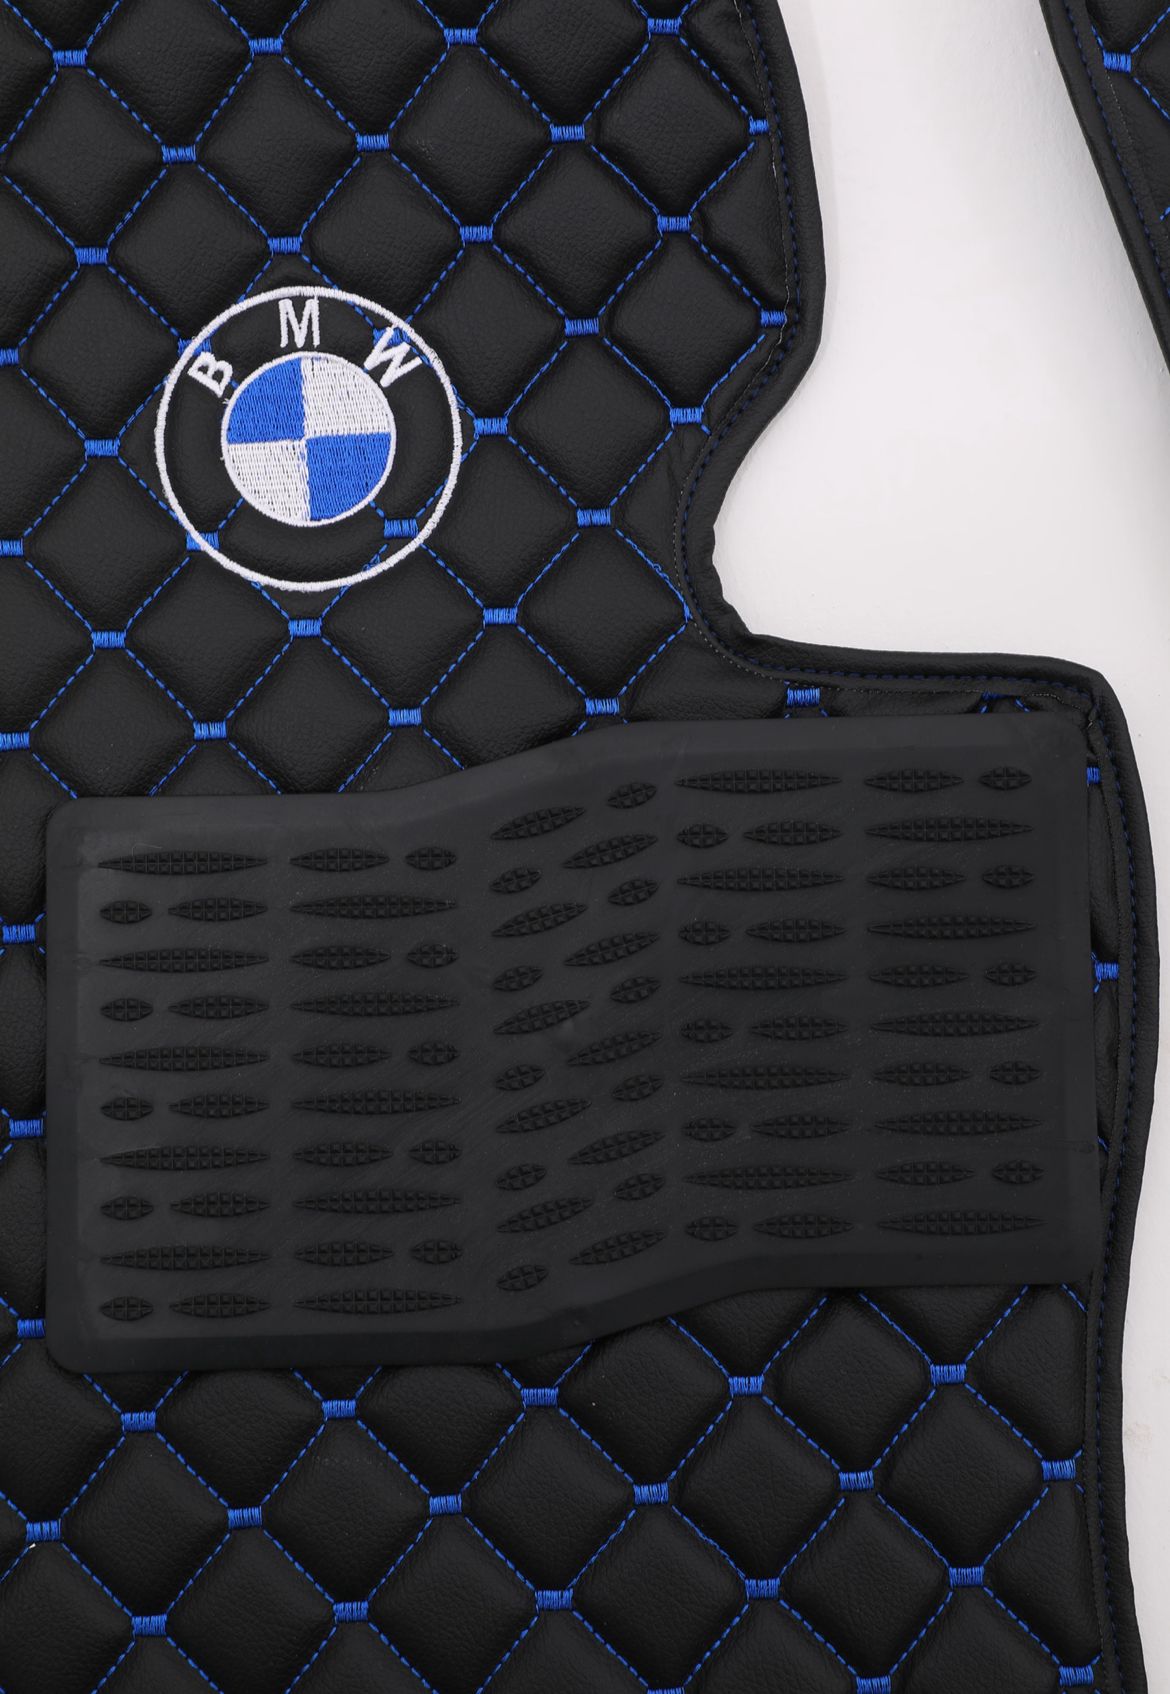 For all BMW F35 M Performance Luxury Leather Custom Car Mat 4x